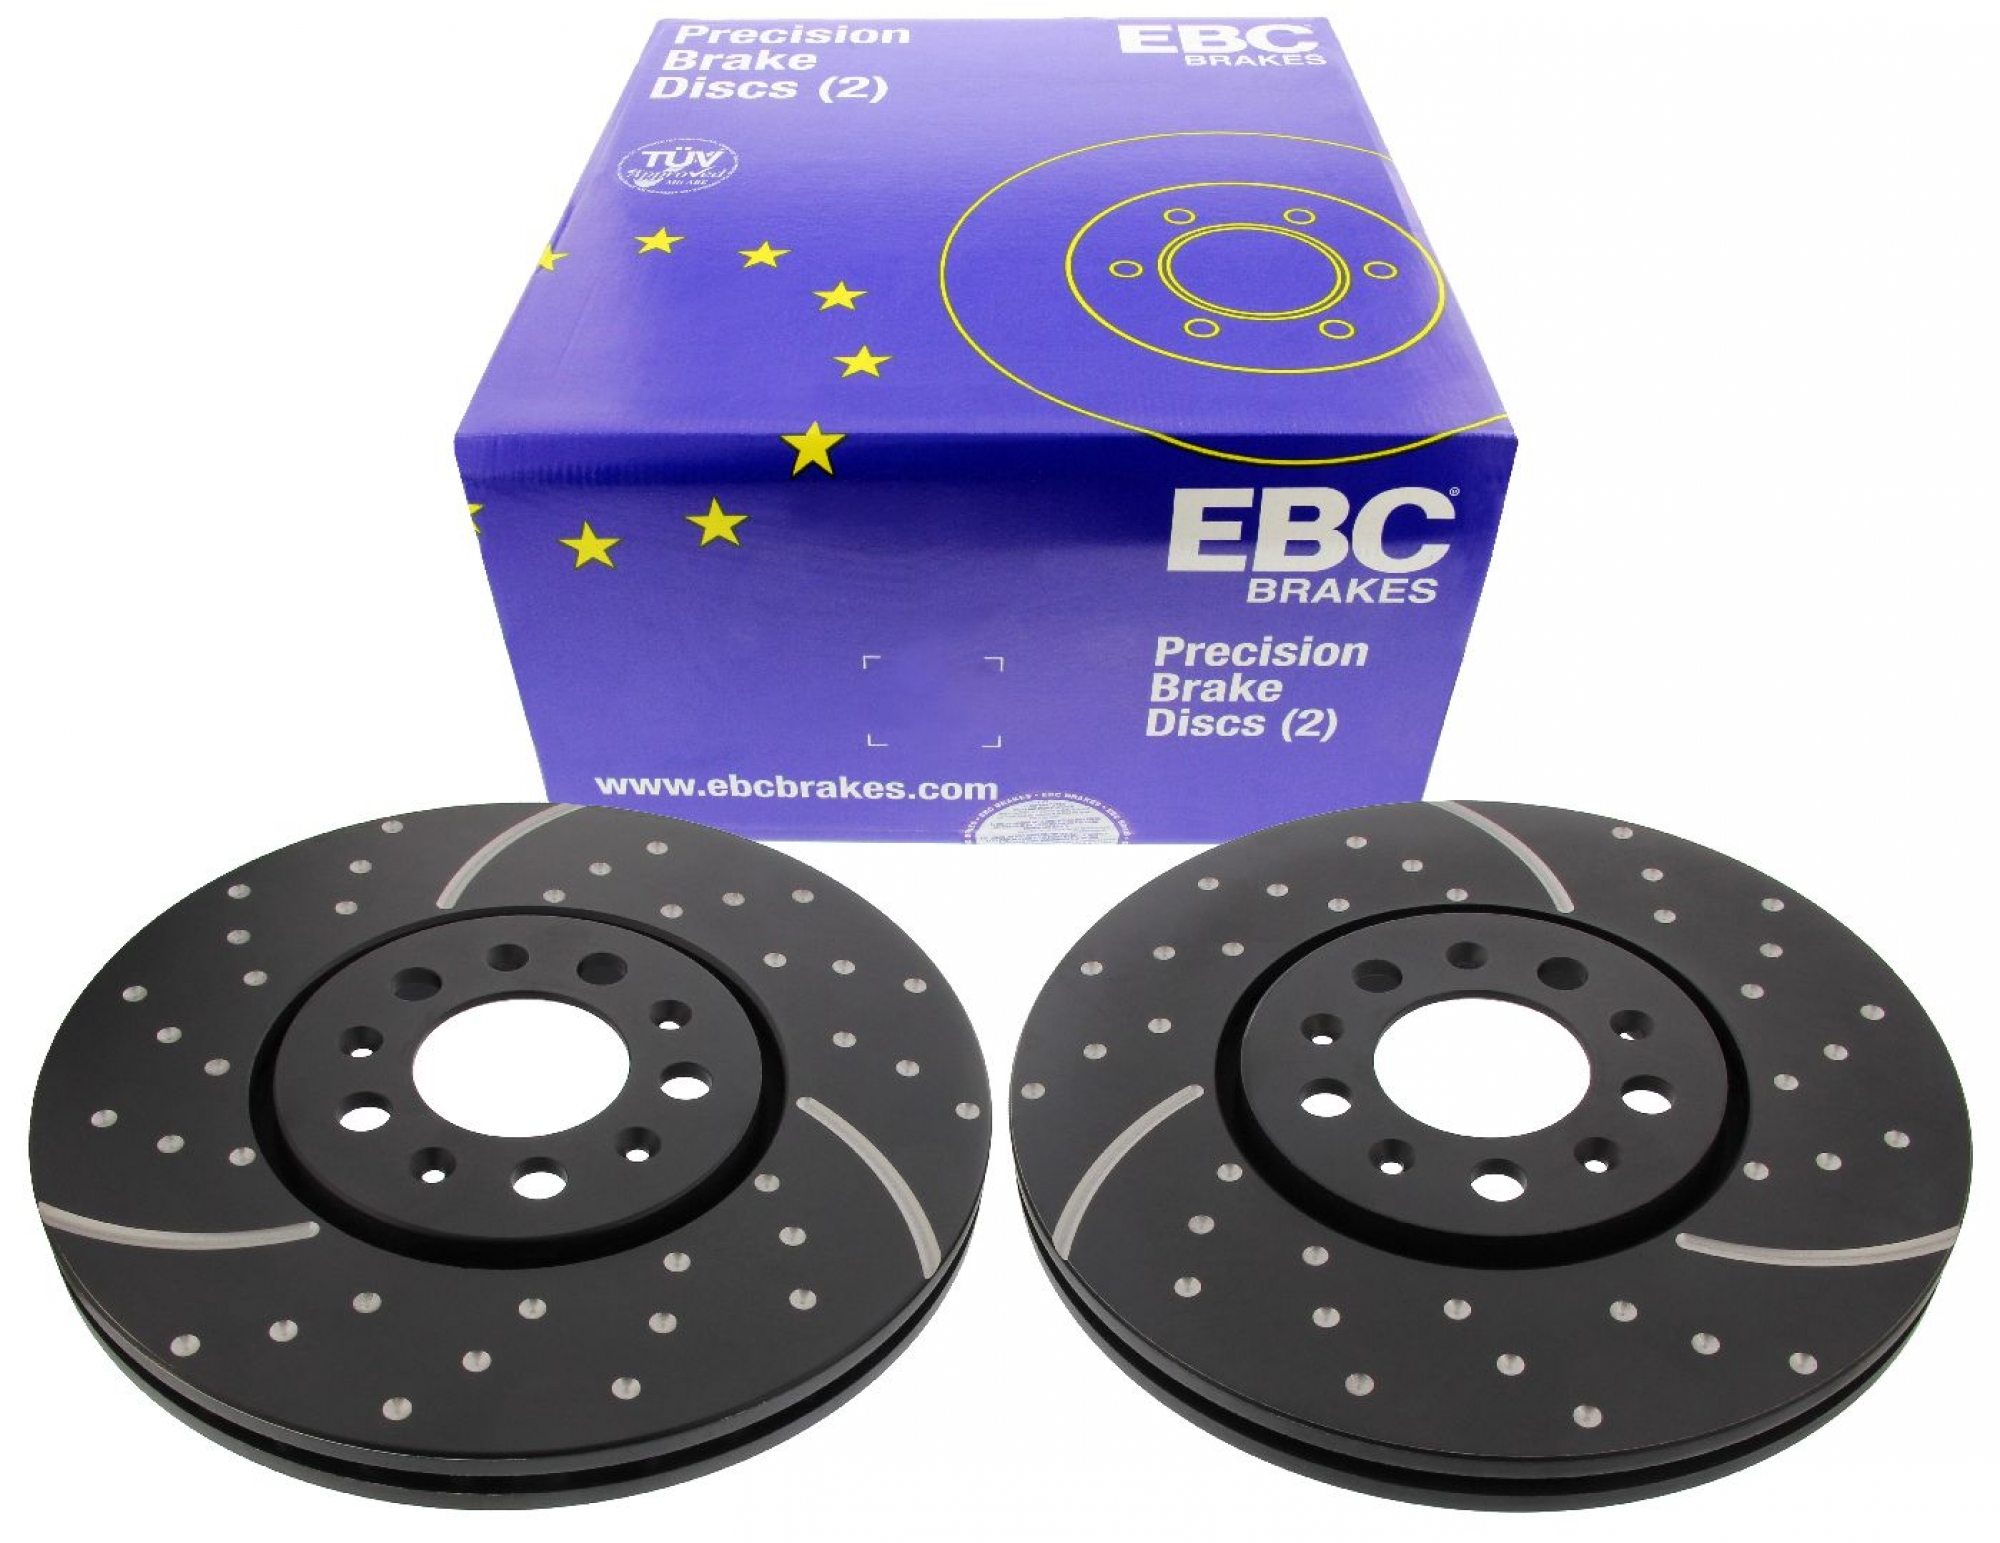 EBC-Bremsscheiben, Turbo Groove Disc Black (2-teilig), VA, VW Golf, Passat